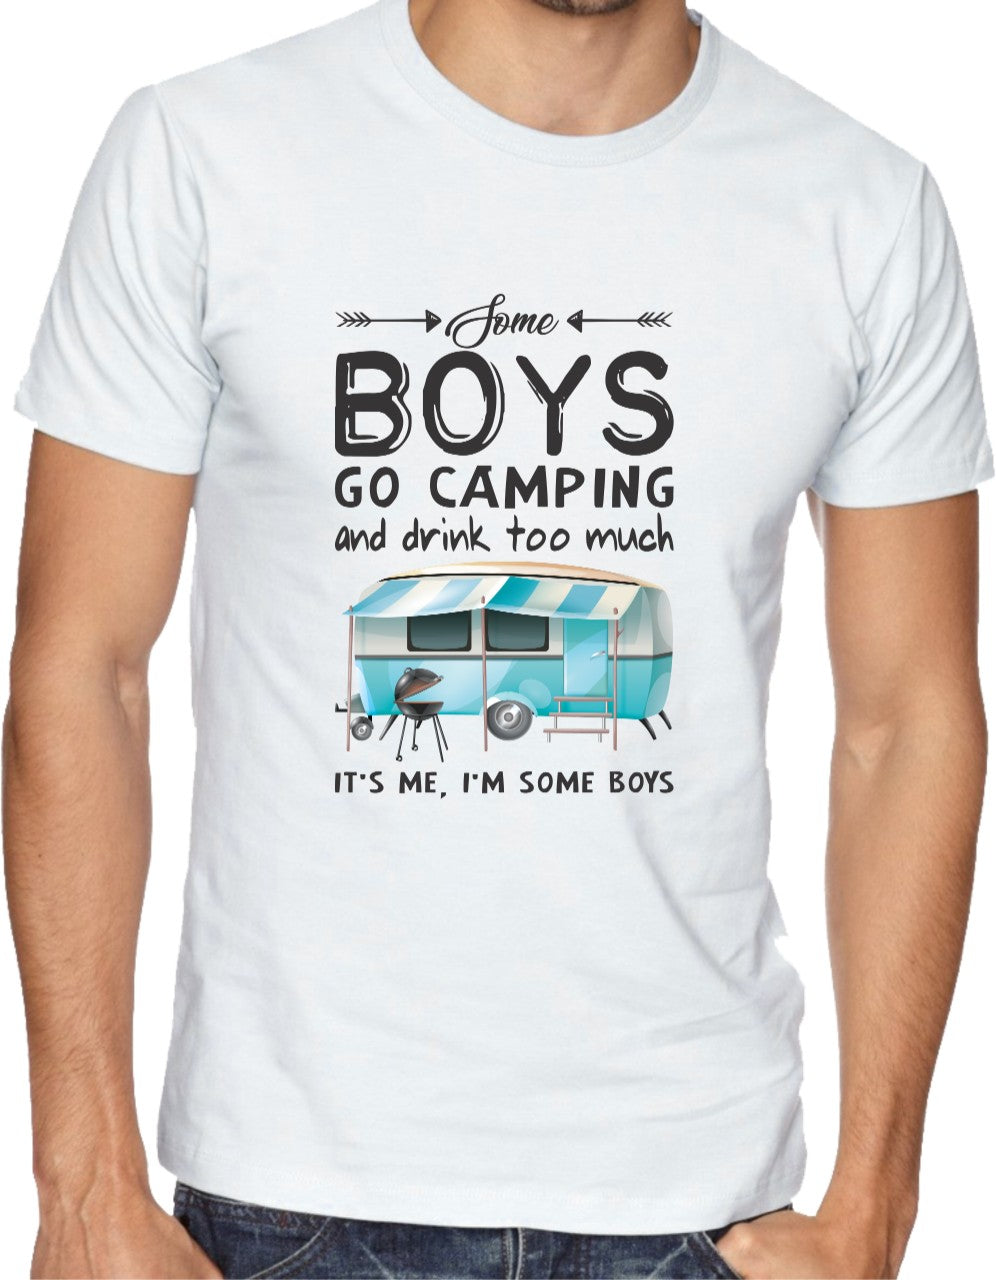 Some boys go camping